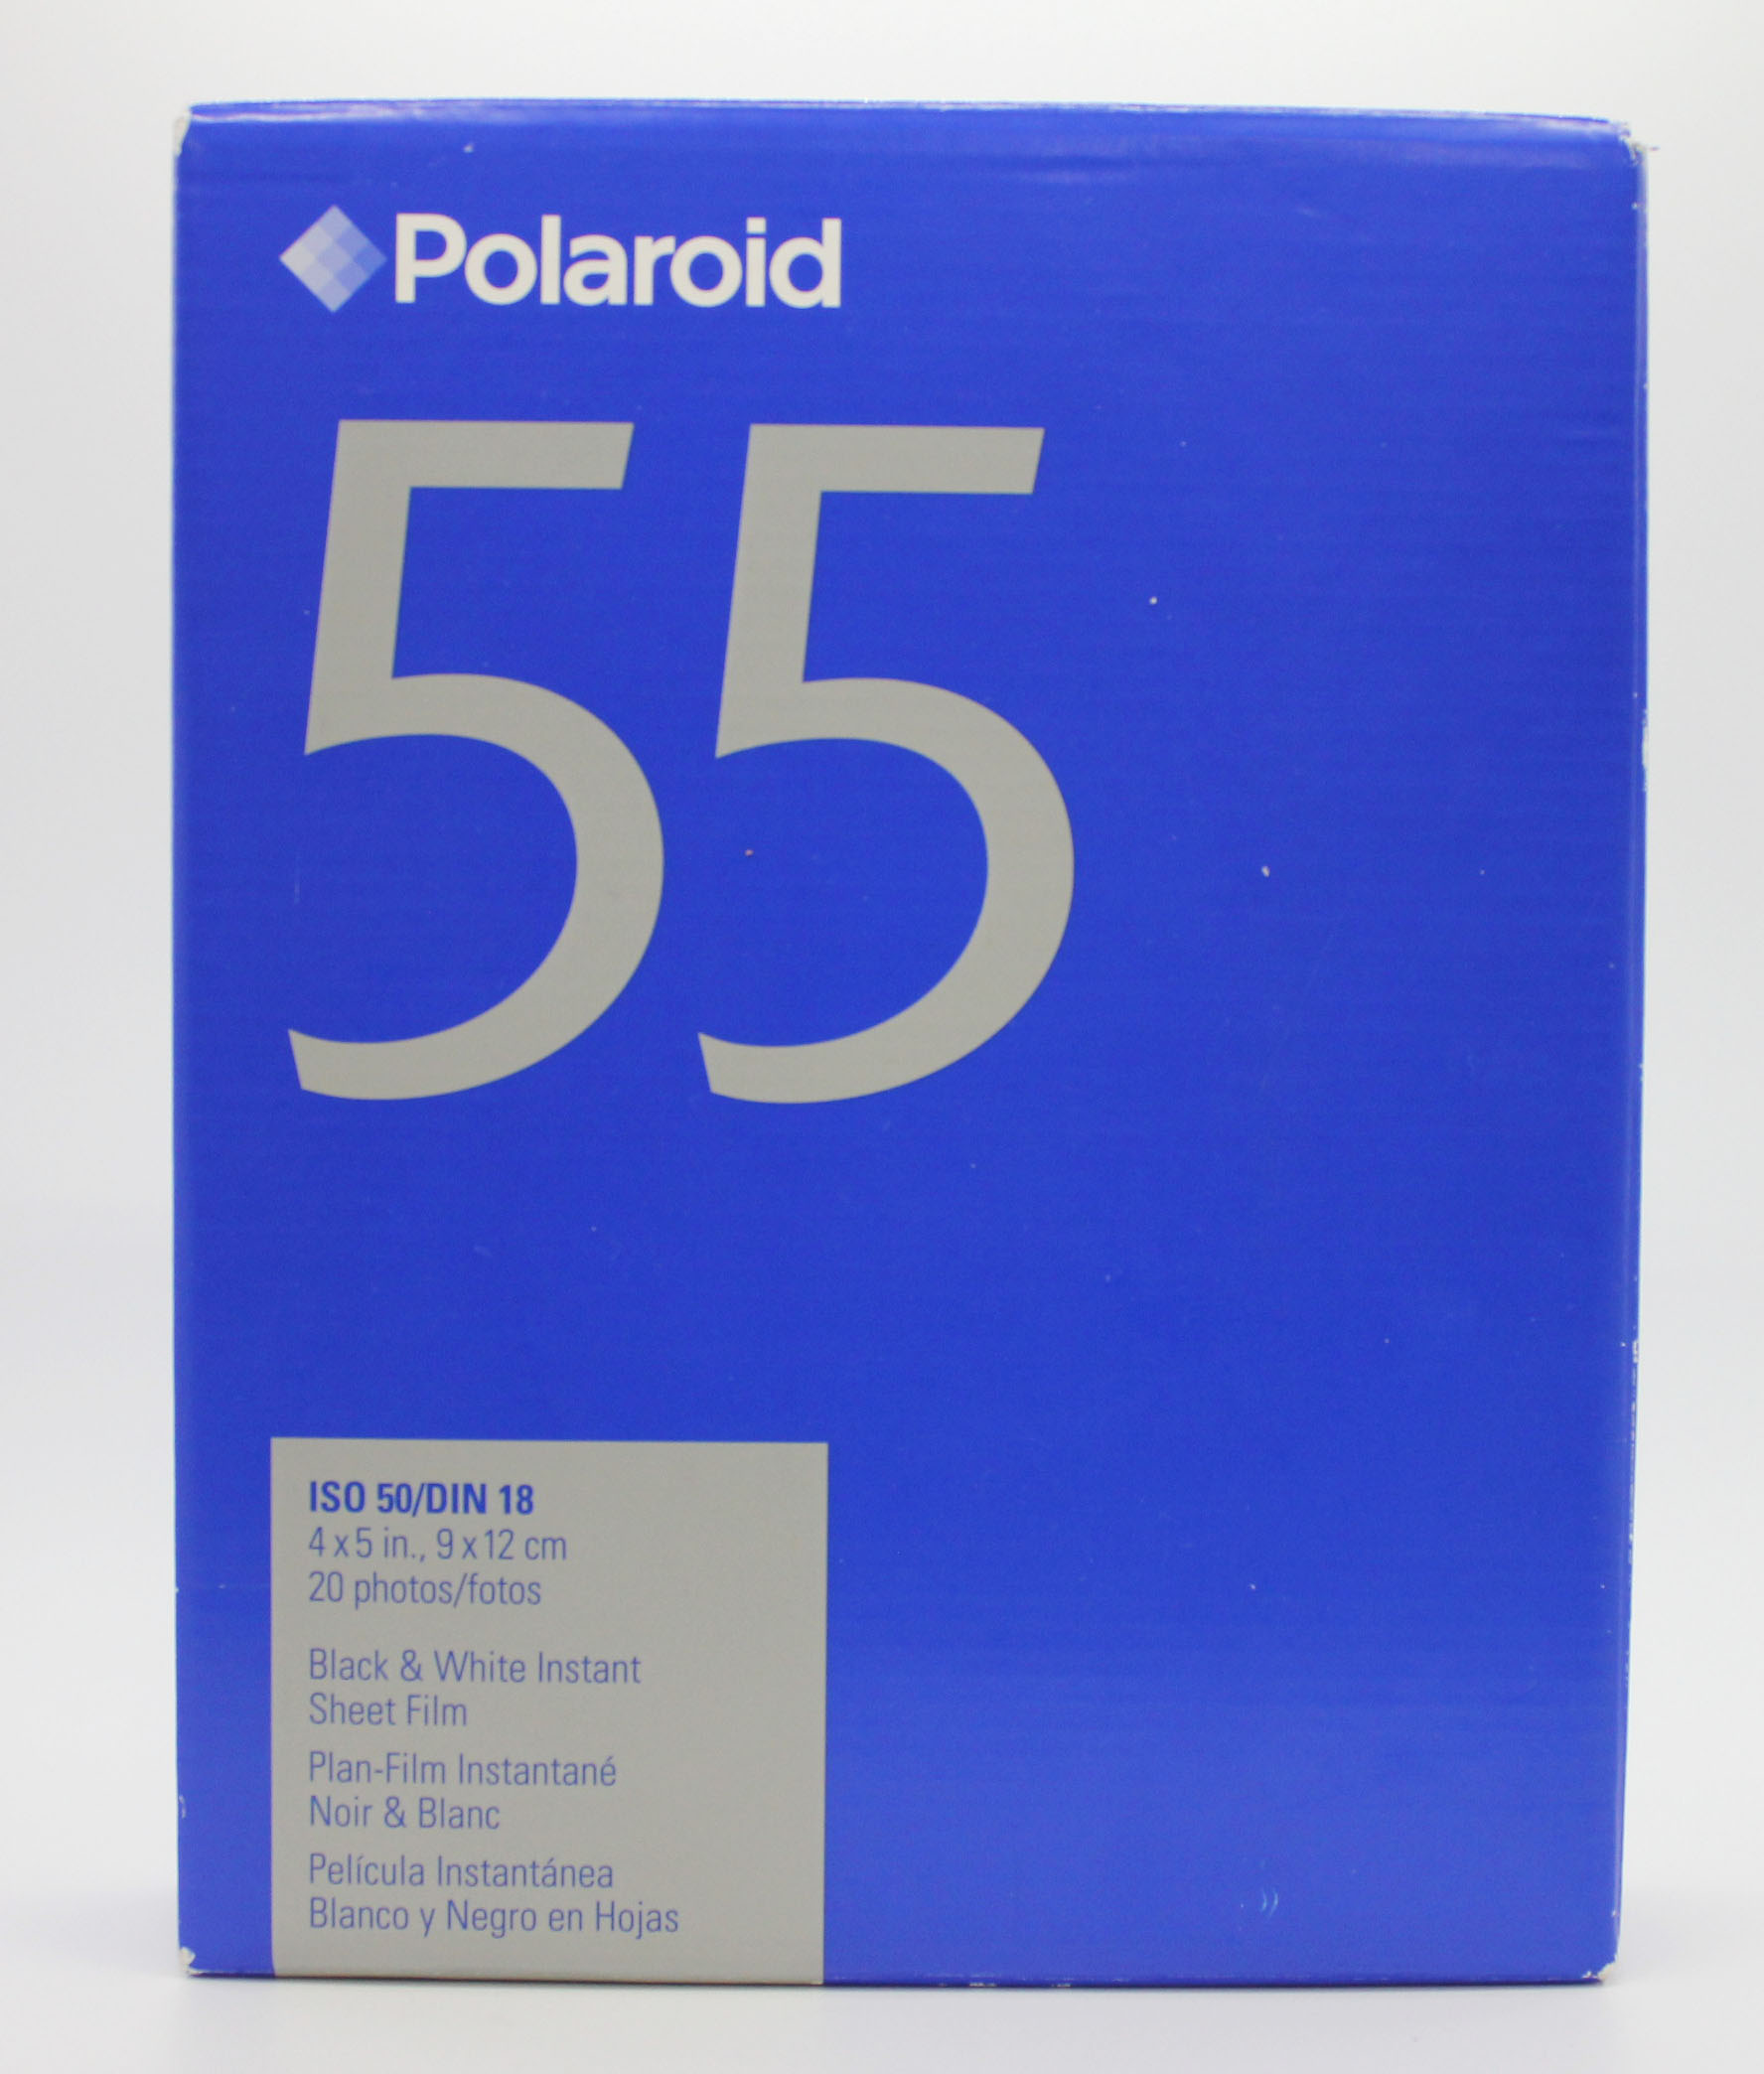  Polaroid 55 4x5in. 9x12cm B&W Black & White Instant Sheet Film 20photos Expired 11/06 from Japan Photo 1